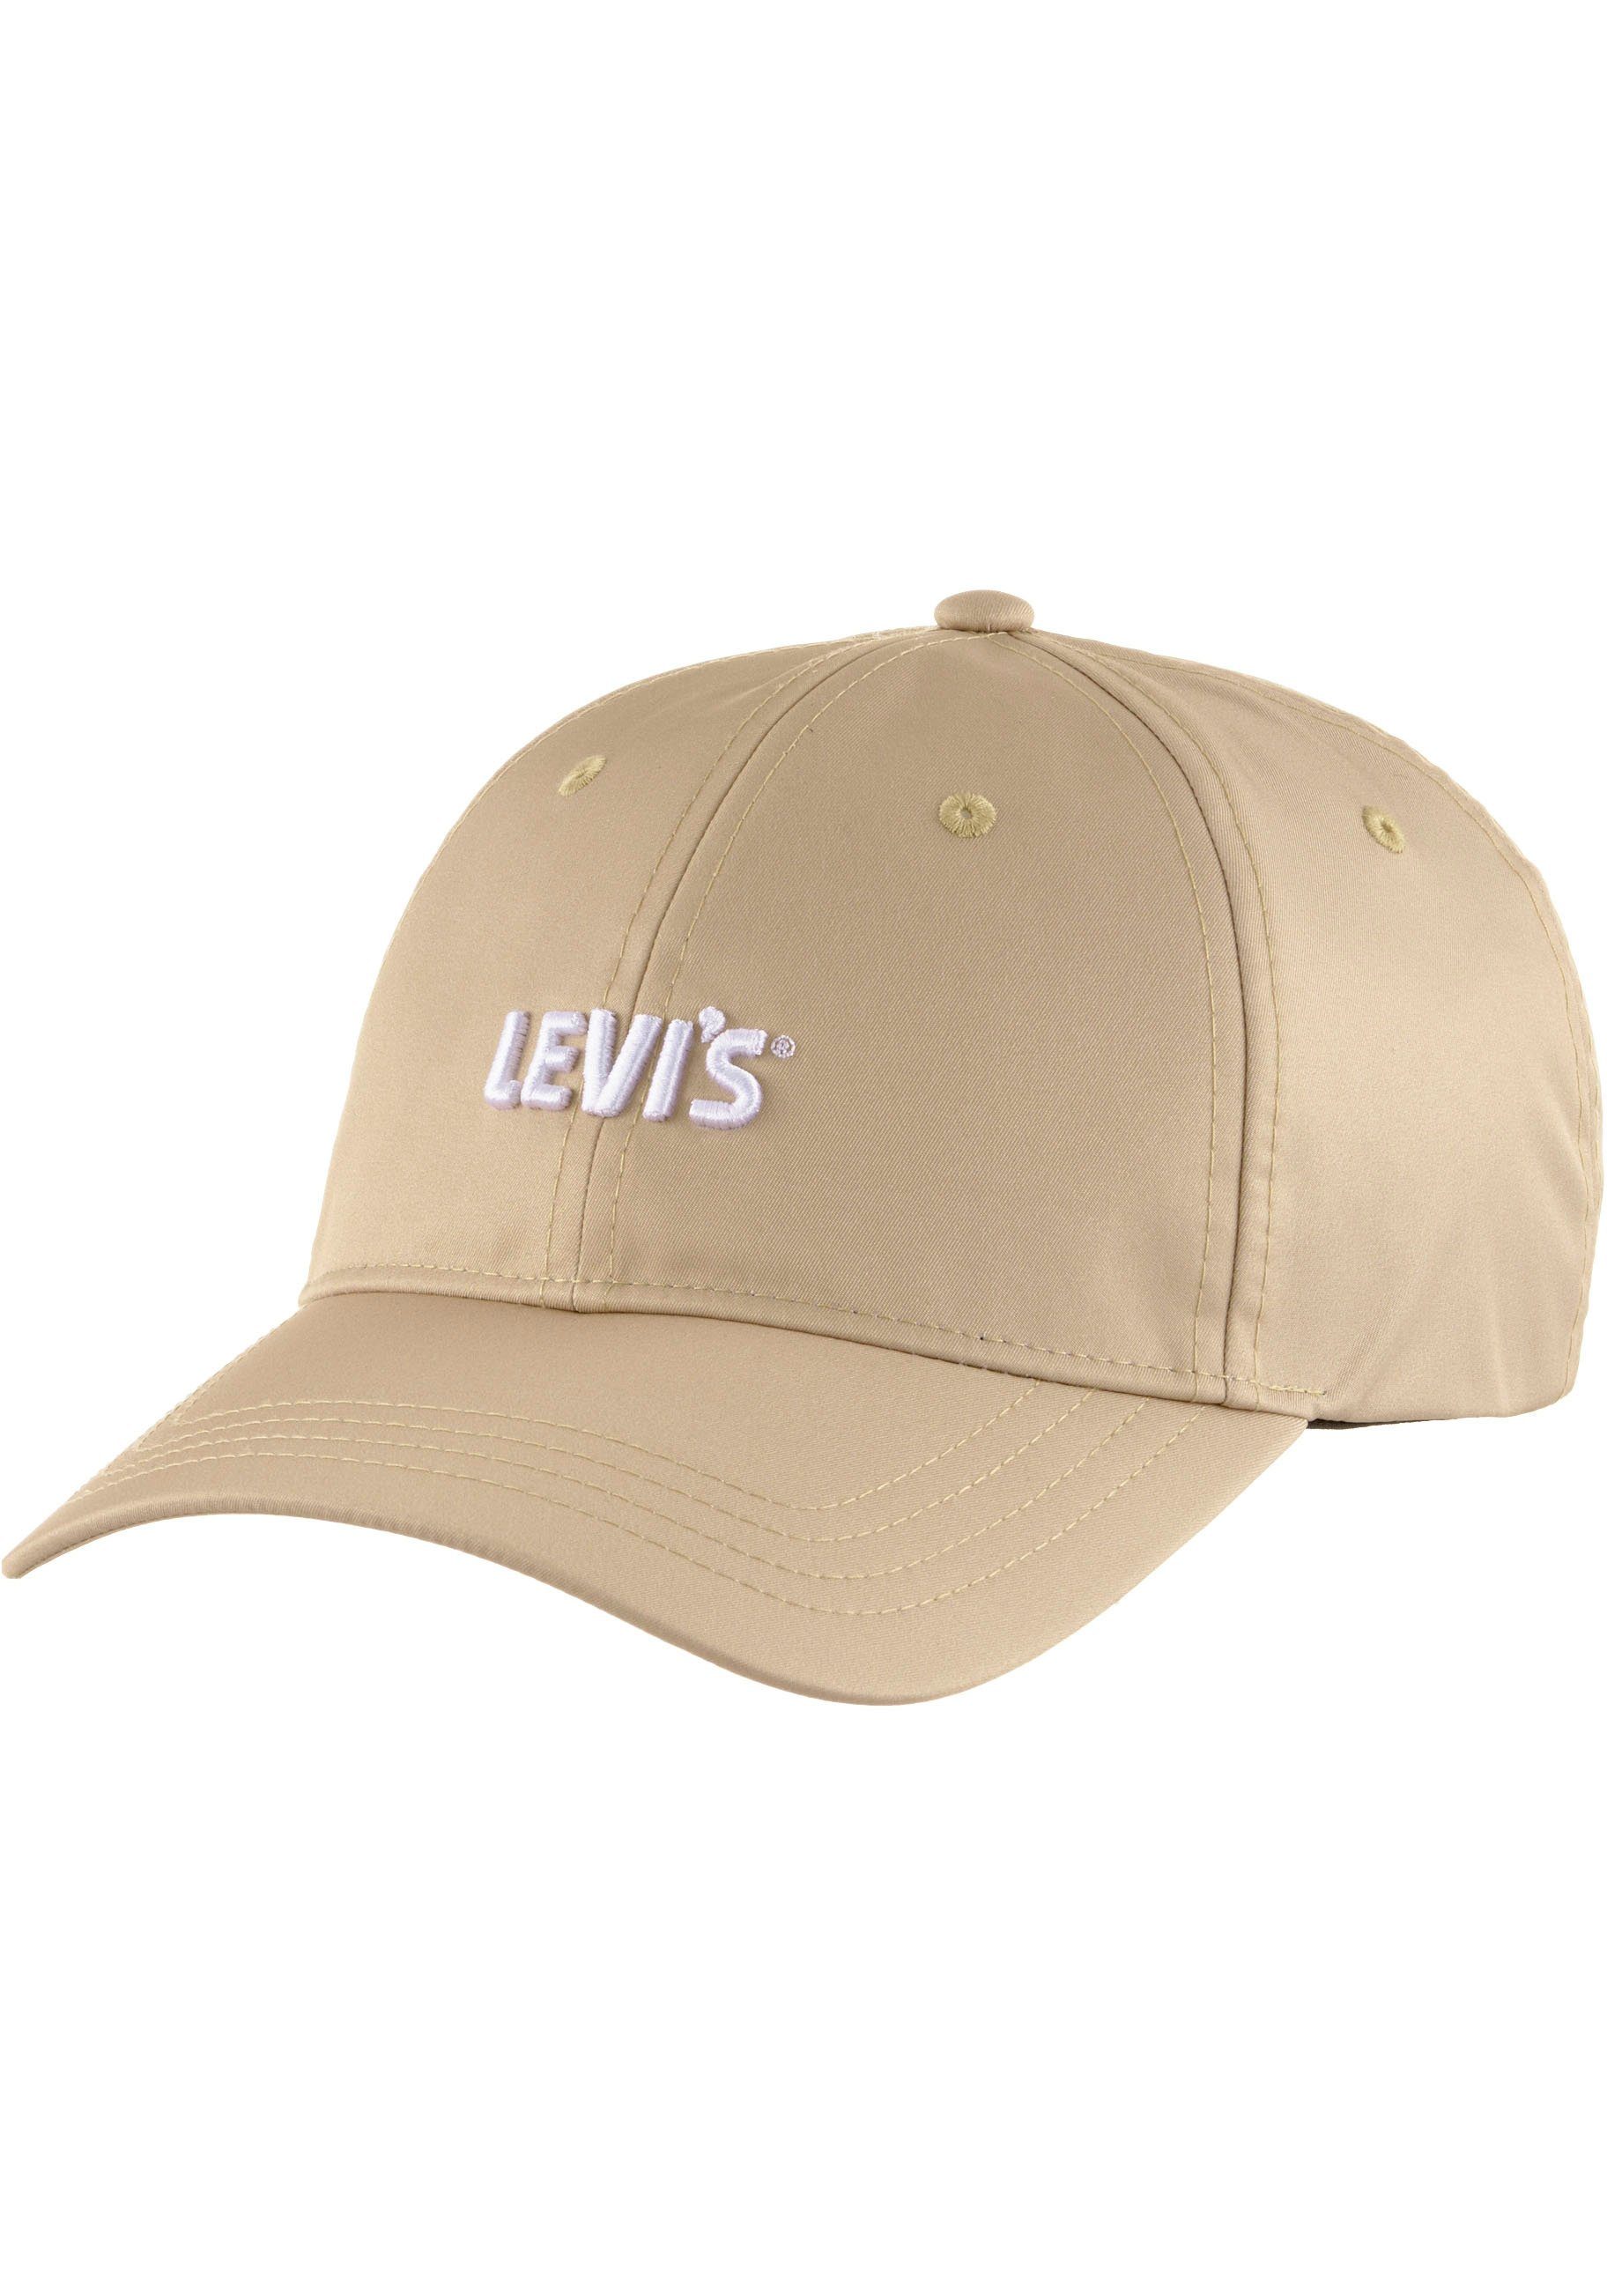 Levi's® Baseball Cap Gold Tab natural tan